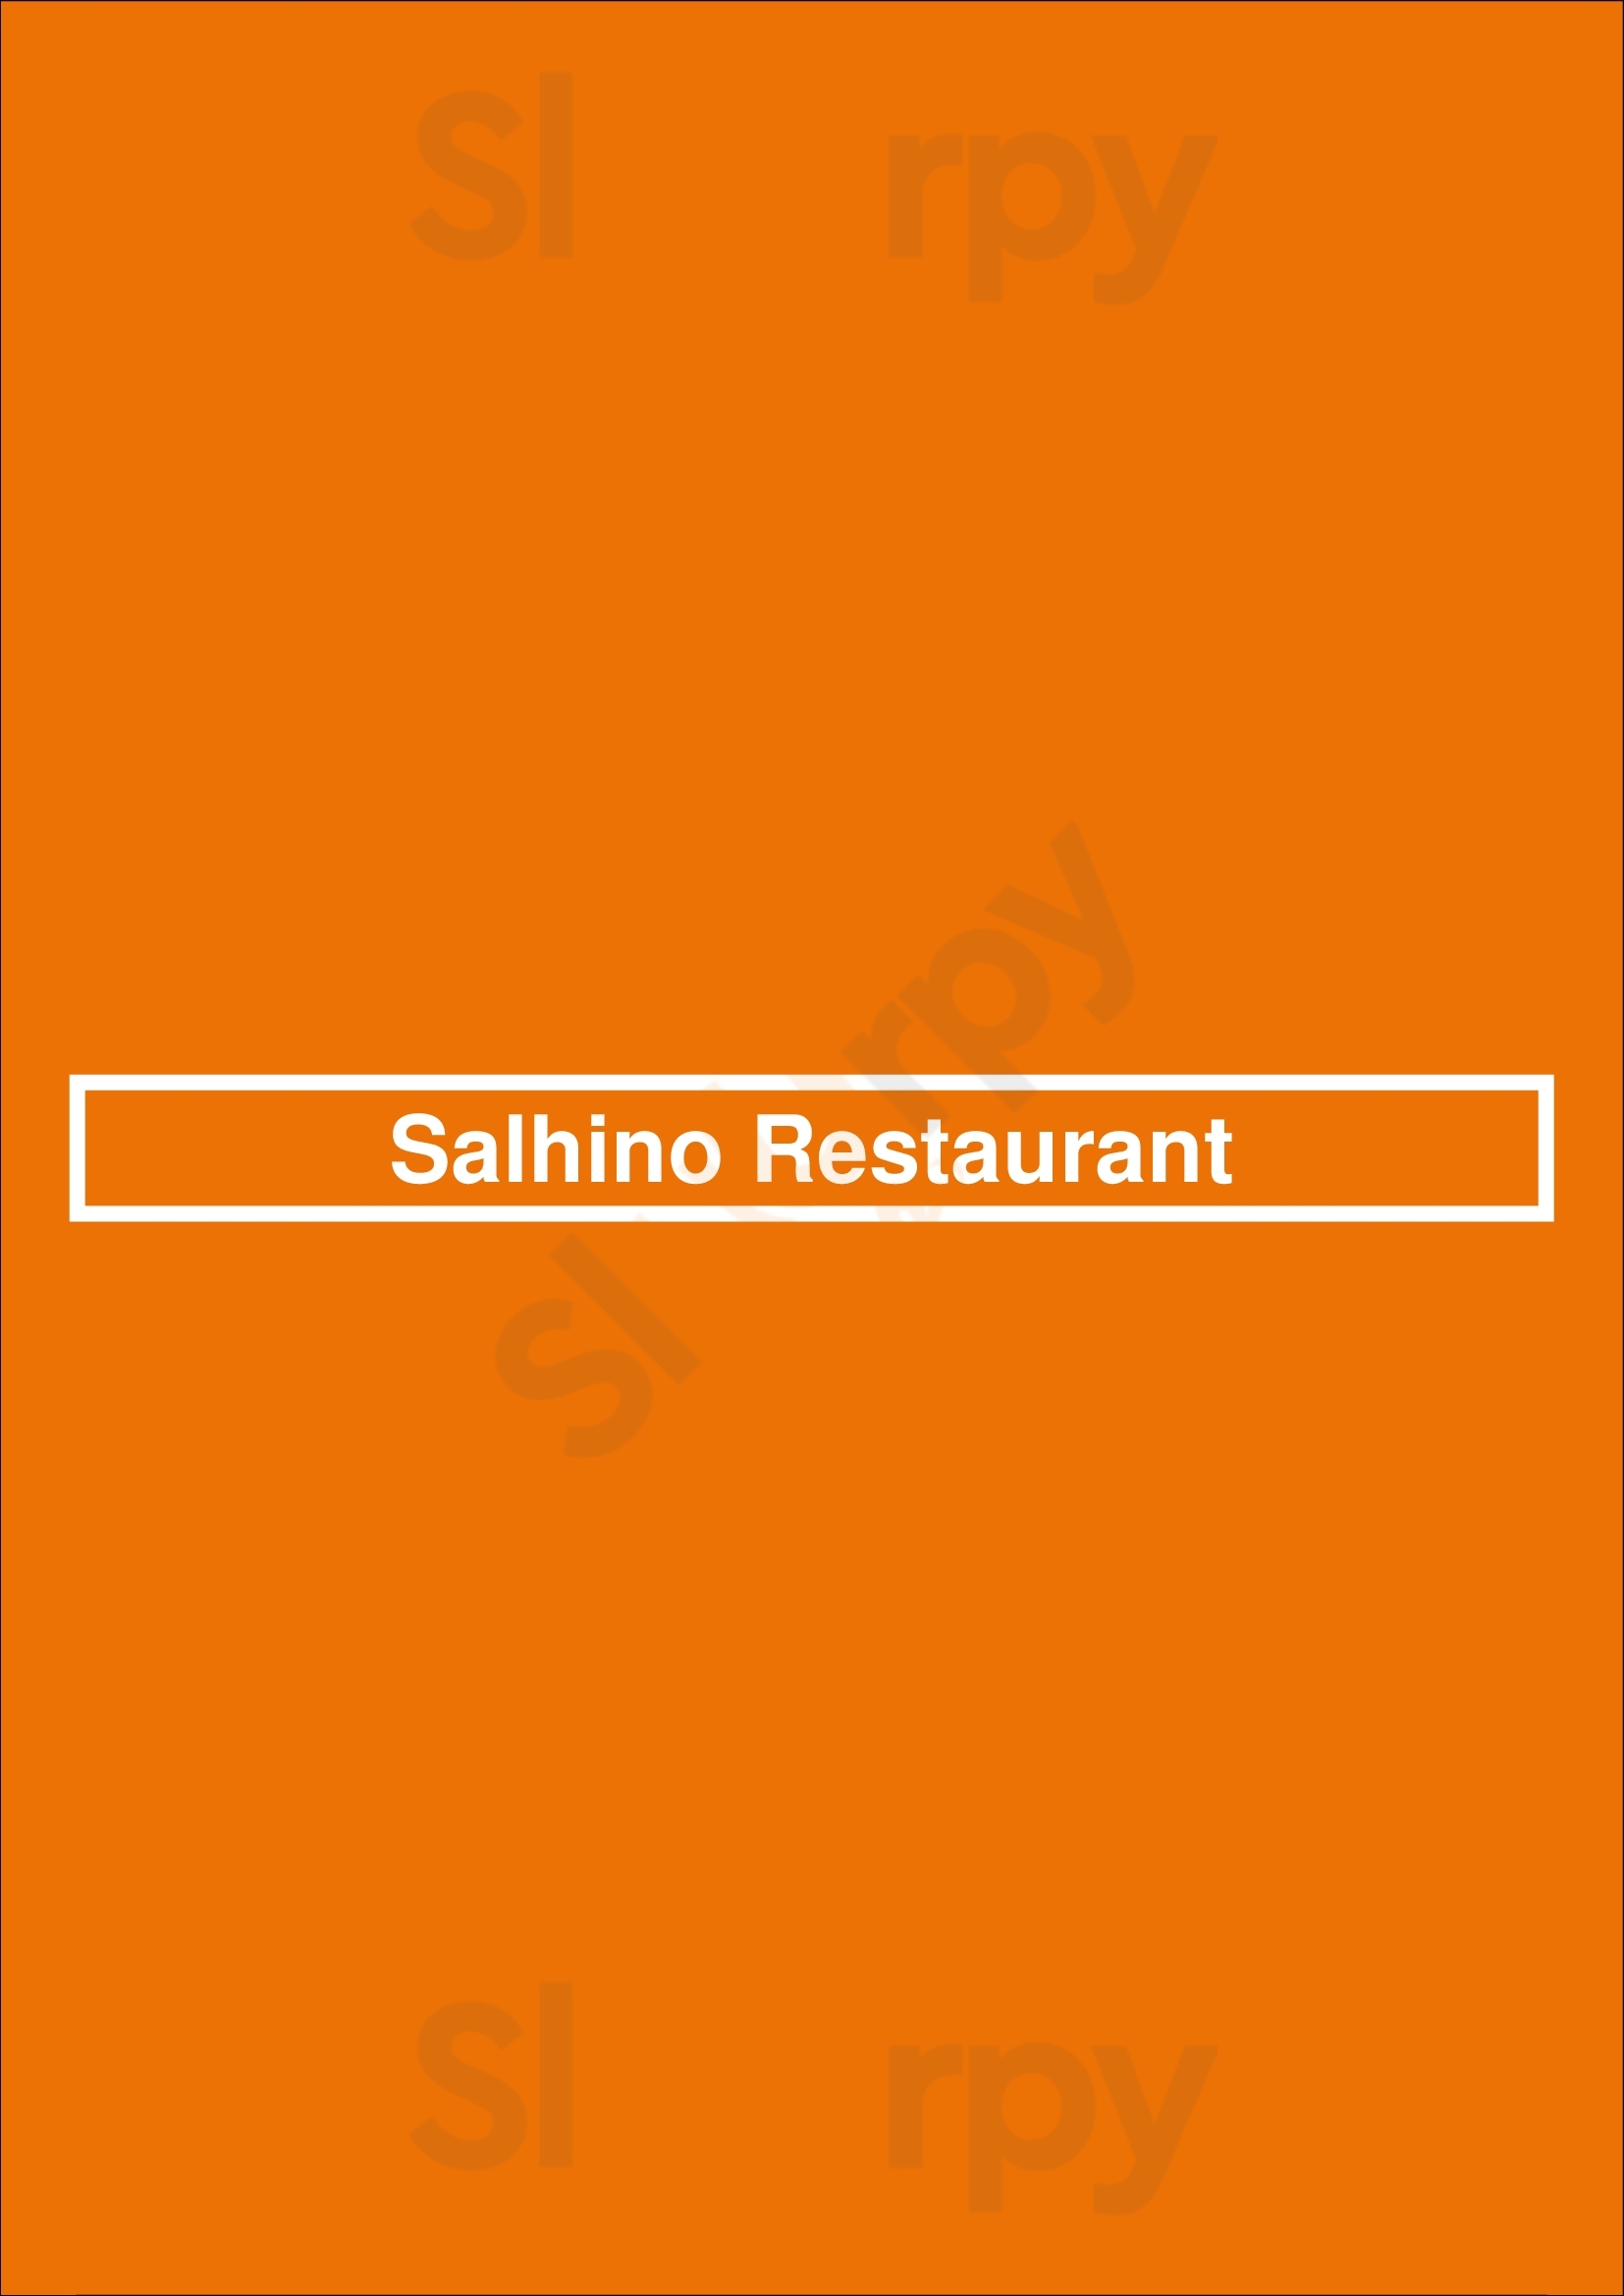 Salhino Restaurant Berlin Menu - 1